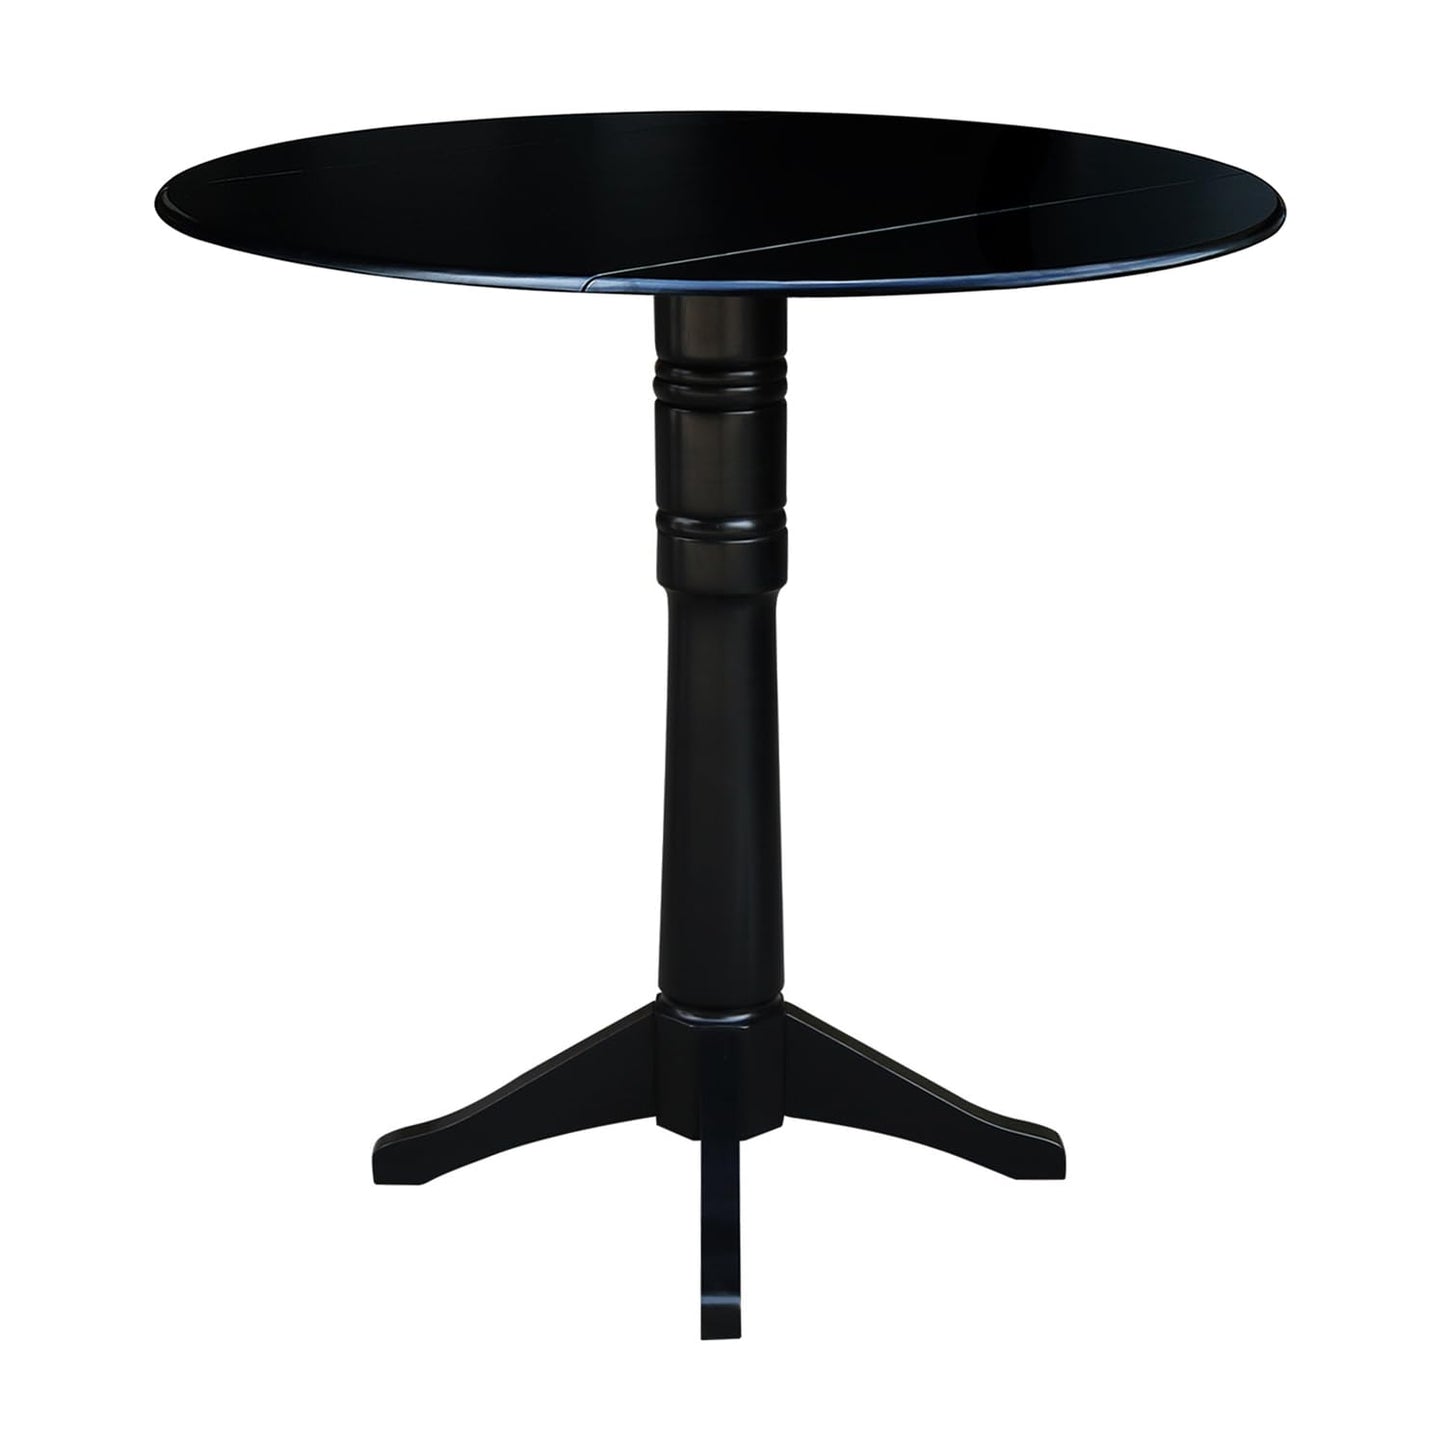 IC International Concepts 42" Round Dual Drop Leaf Pedestal, 42.3" H Dining Table, Black